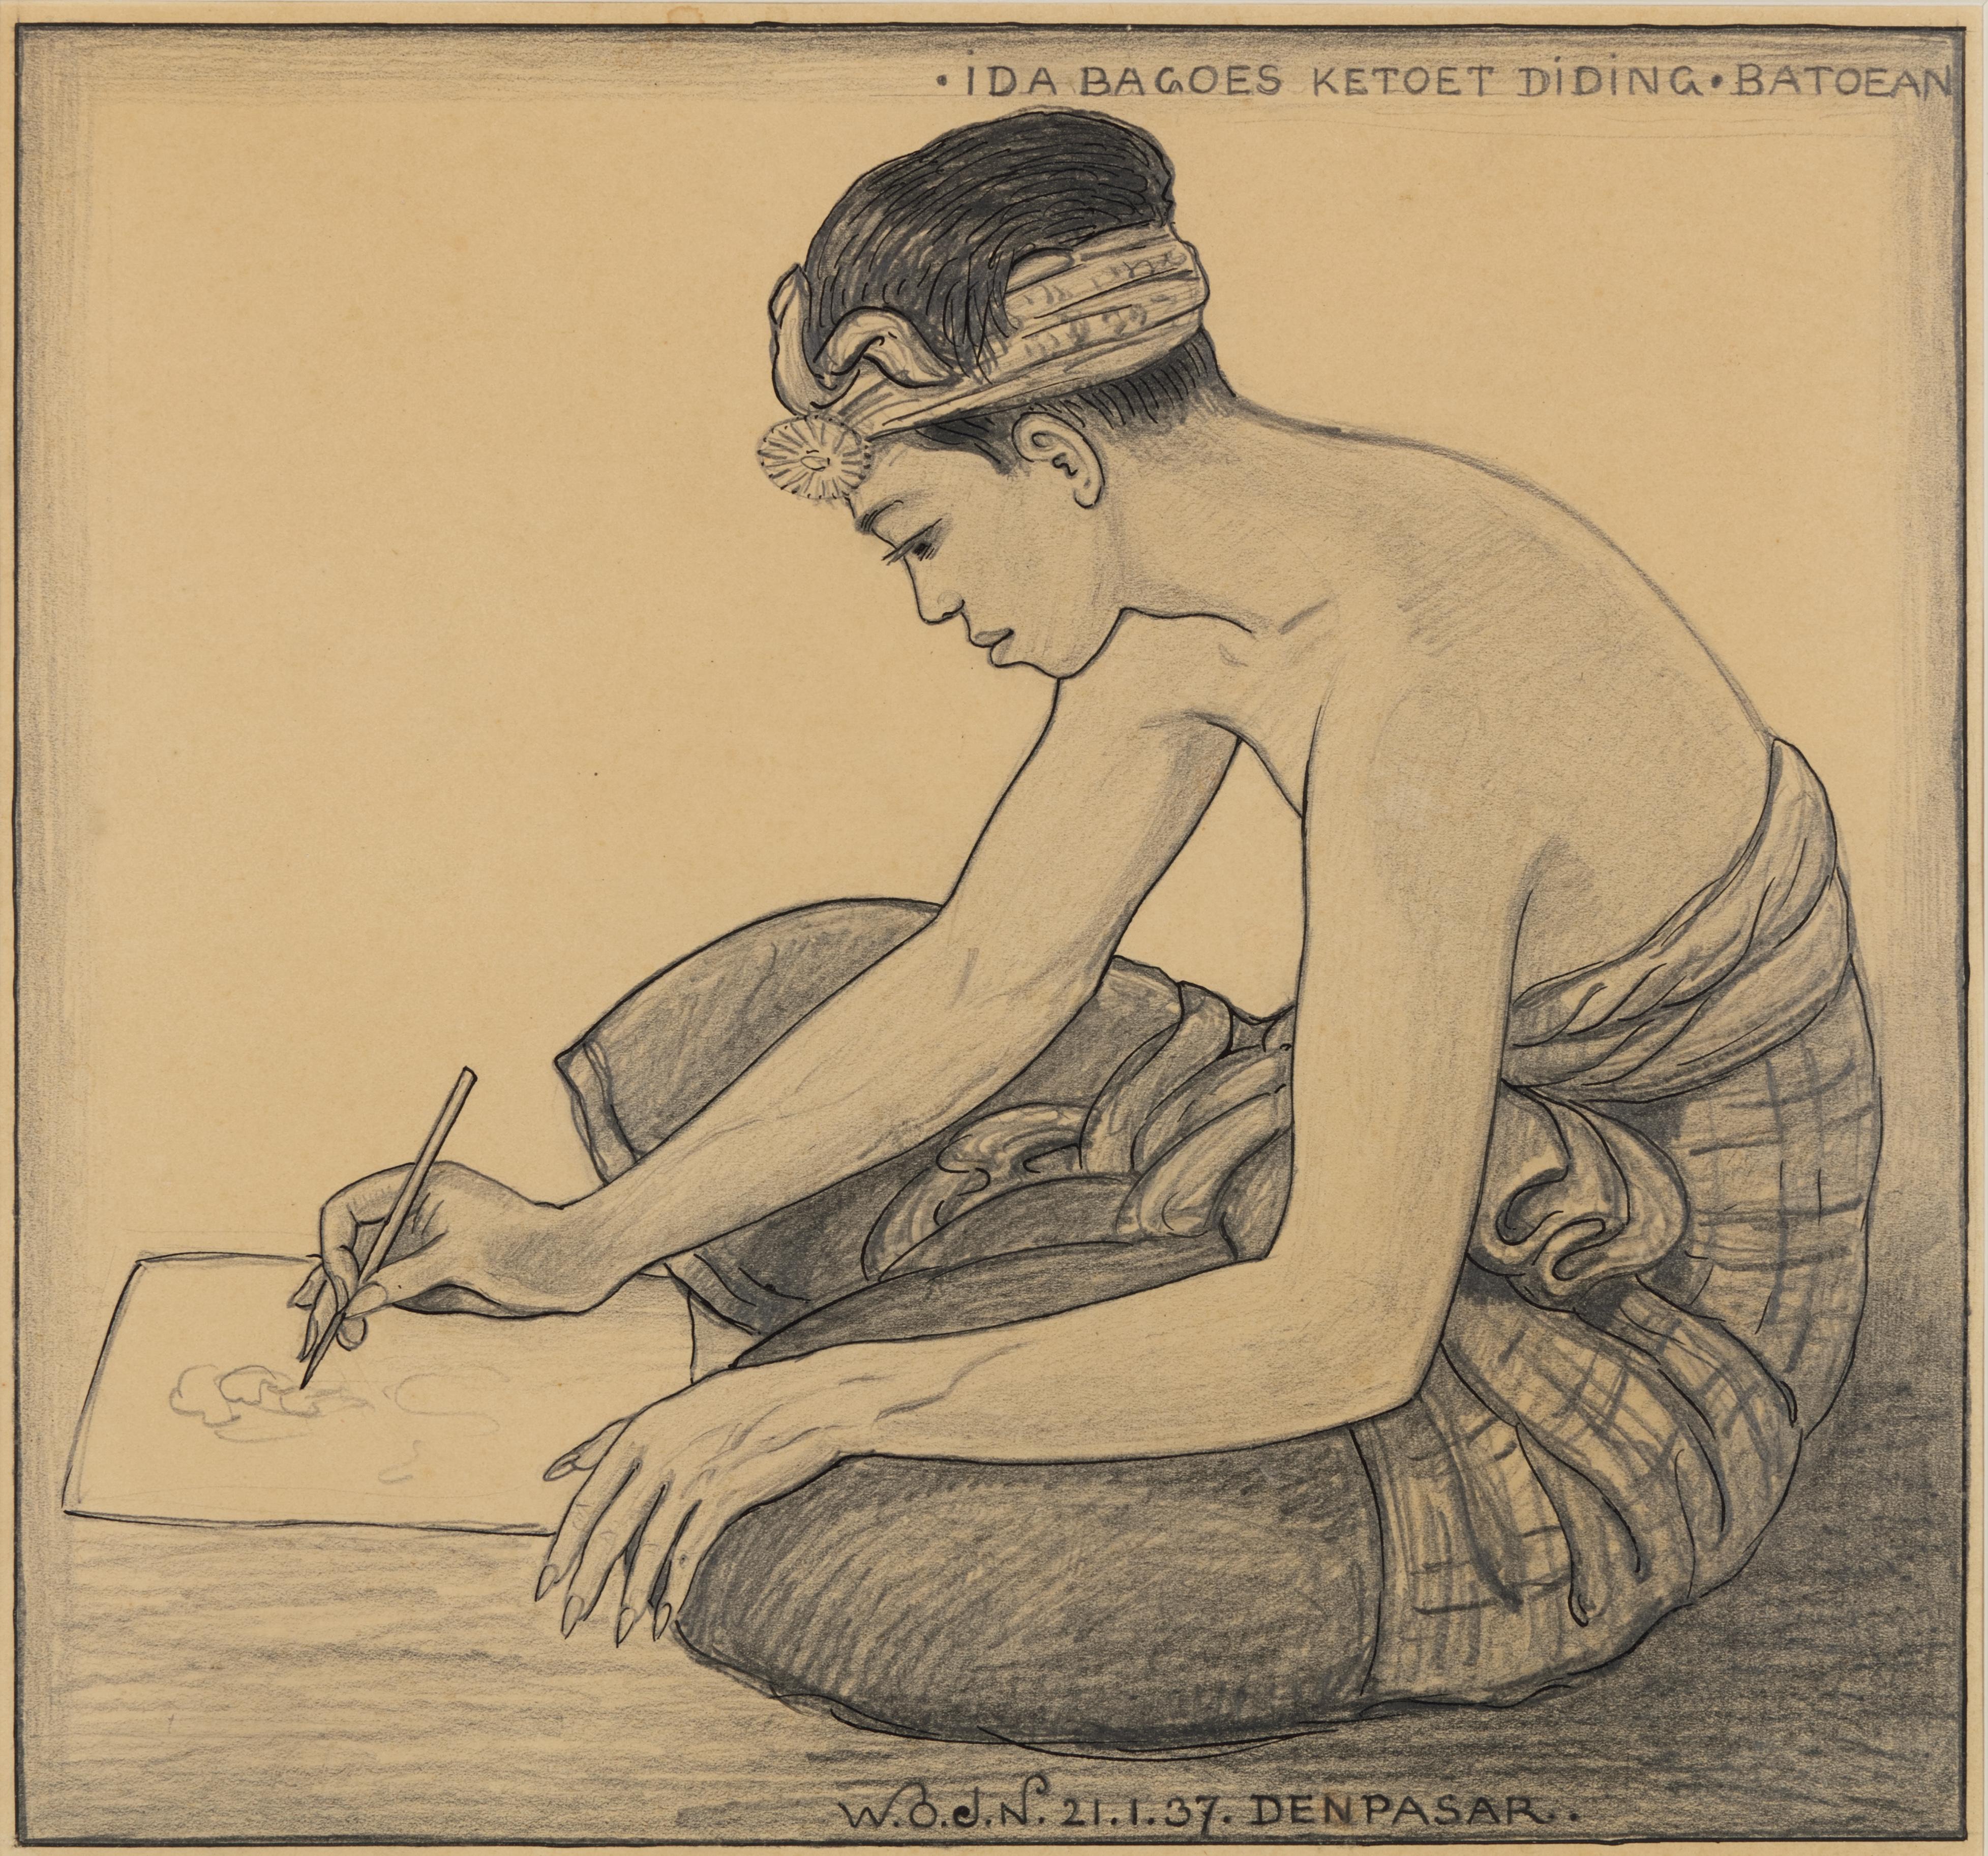 Porträt der Künstlerin Ida Bagoes Ketut Diding, Bali, 1937